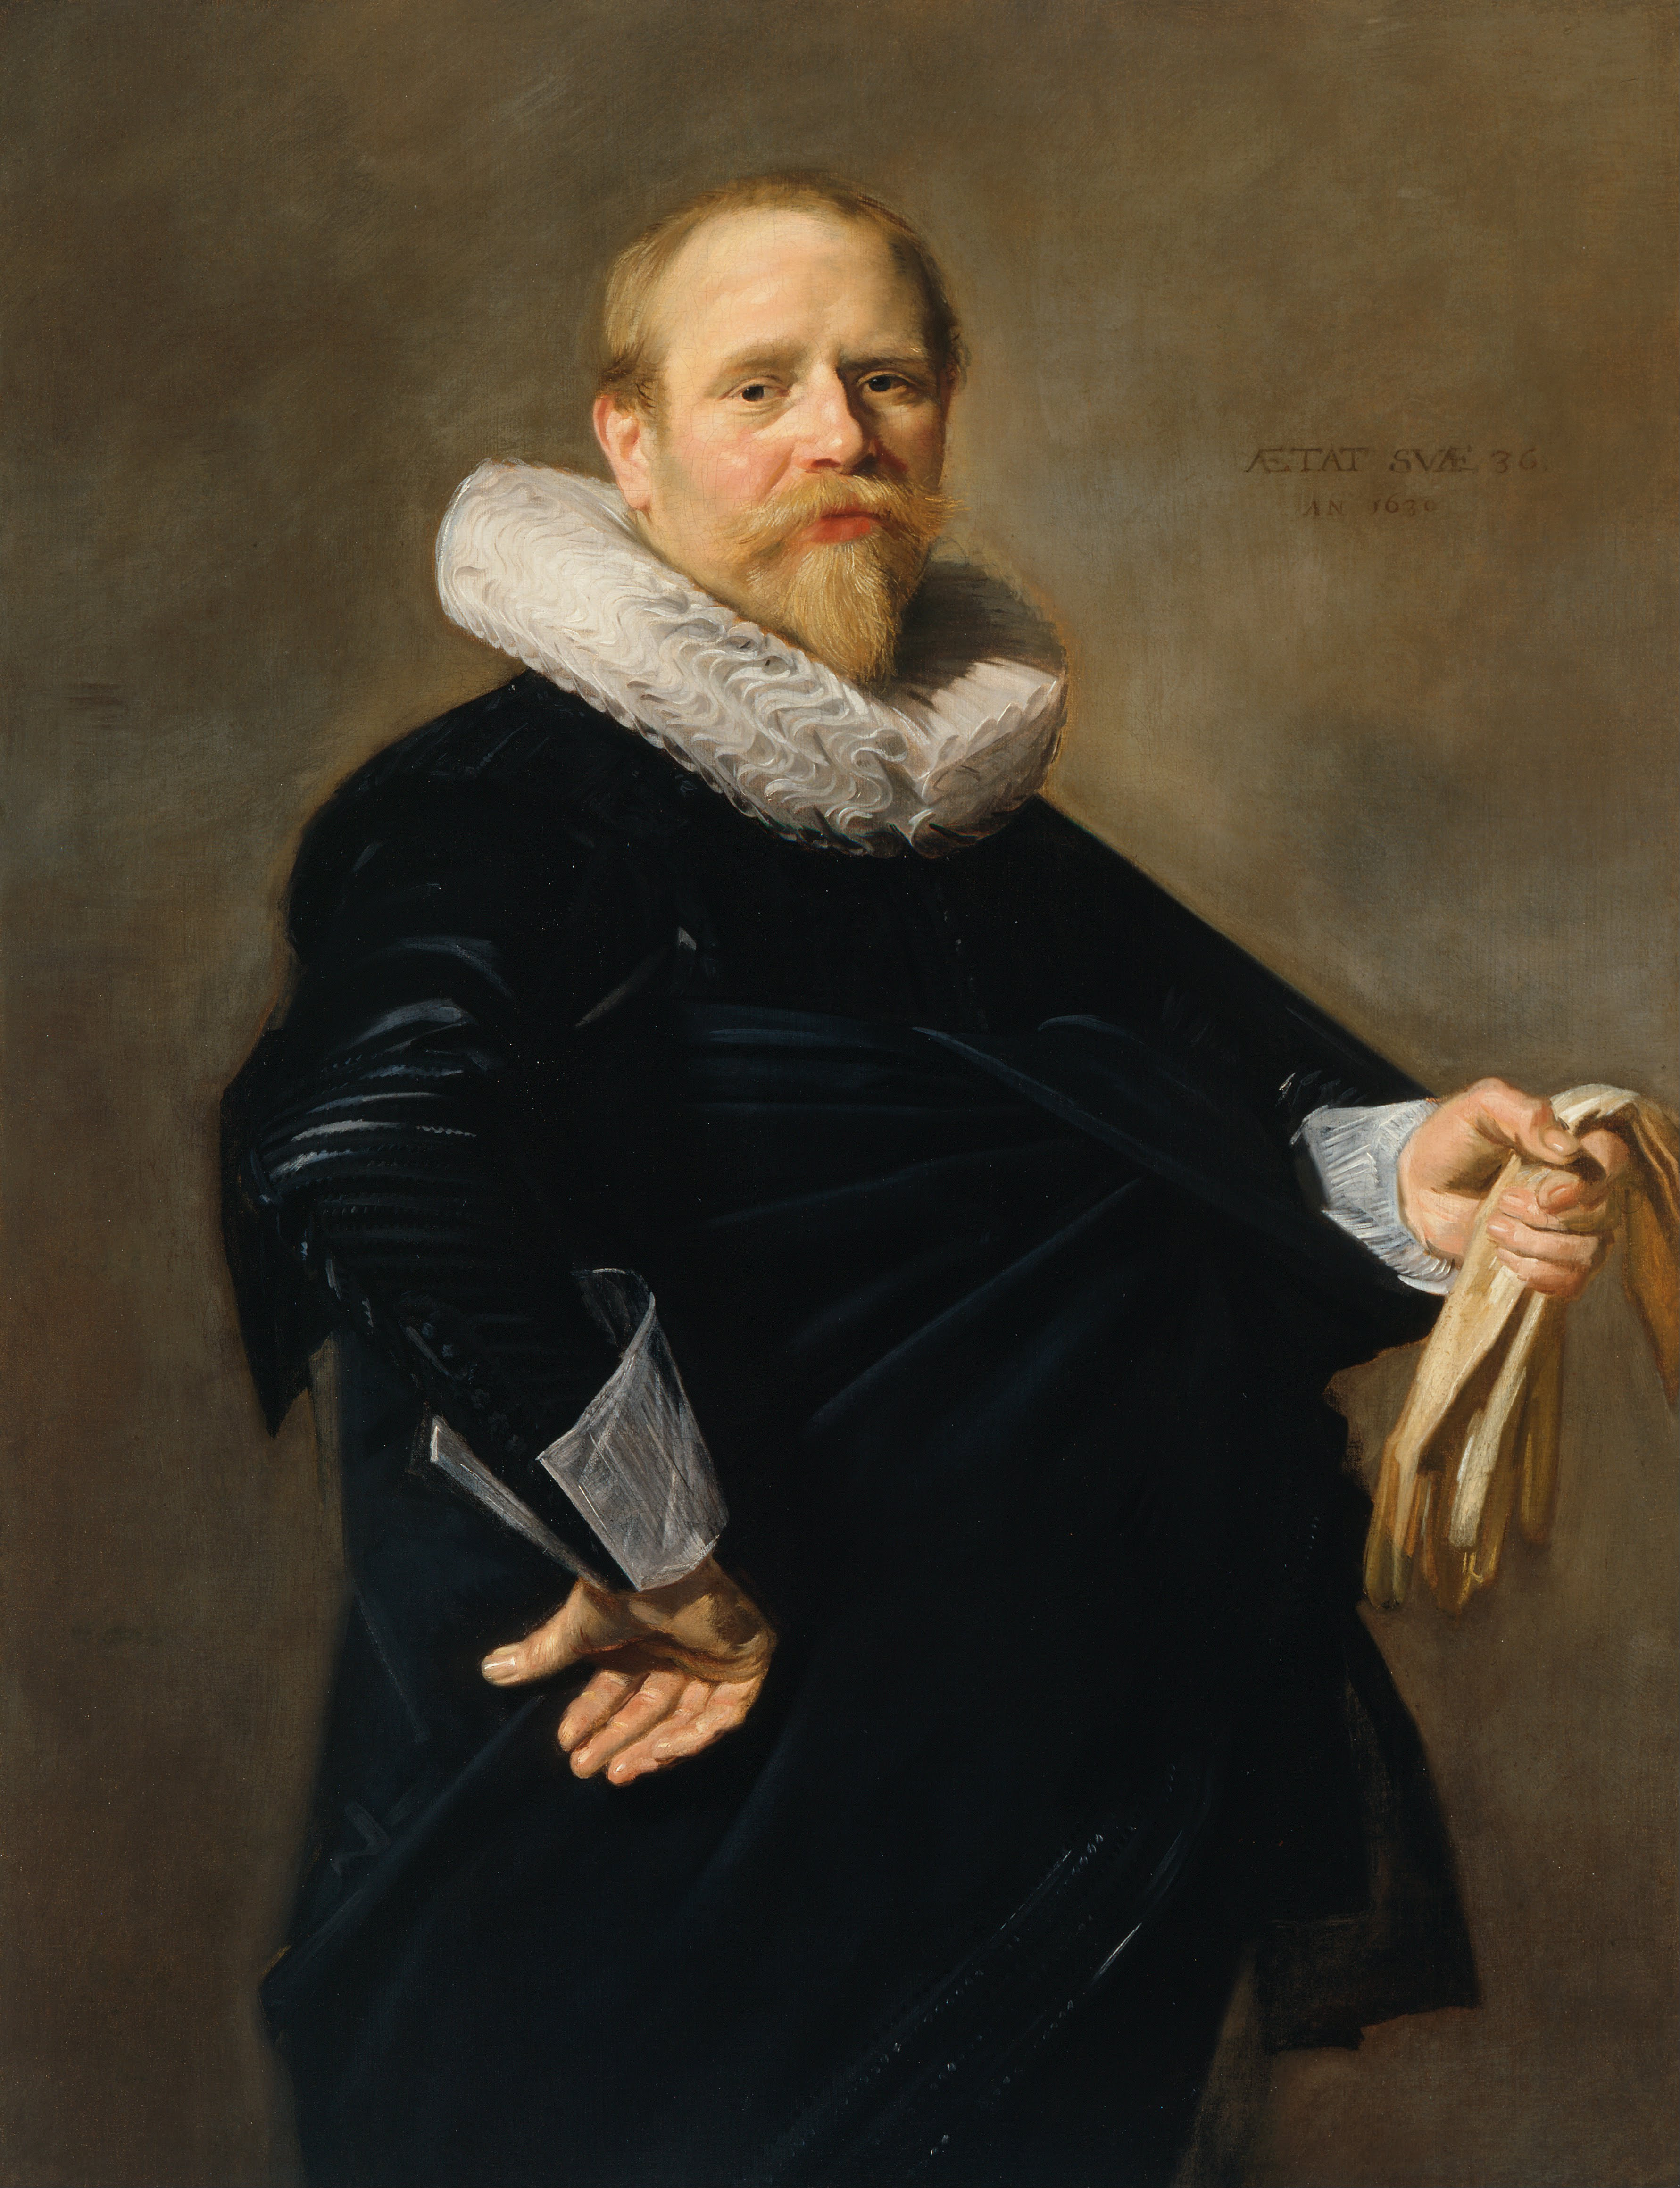 Portrait of a Man by Frans Hals - 1630 - 116.7 x 90.2 cm Royal Collection Trust